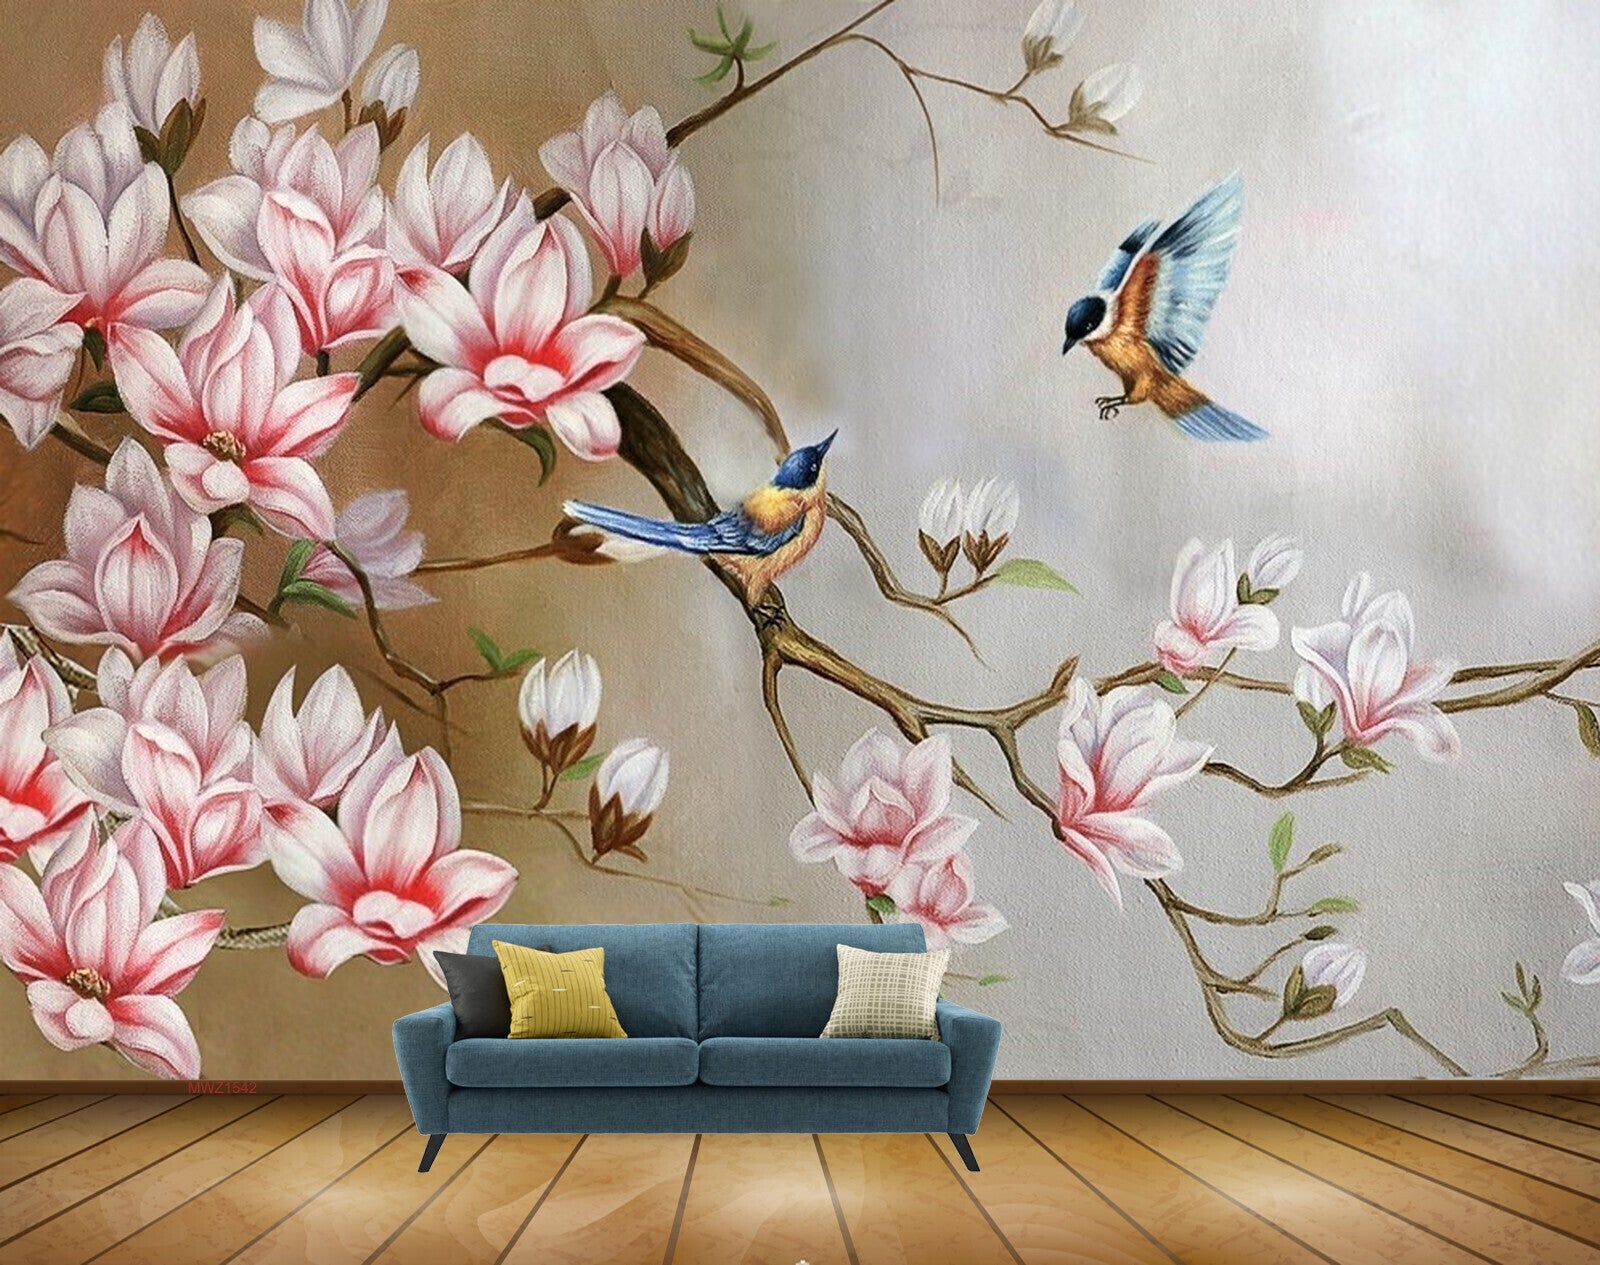 Mystic Walls MWZ0474 White Flowers Birds Butterflies River House HD 3D  Wallpaper for Bedroom Hall4 ft x 3 ft  122 cm x 91 cm  Amazonin  Home Improvement